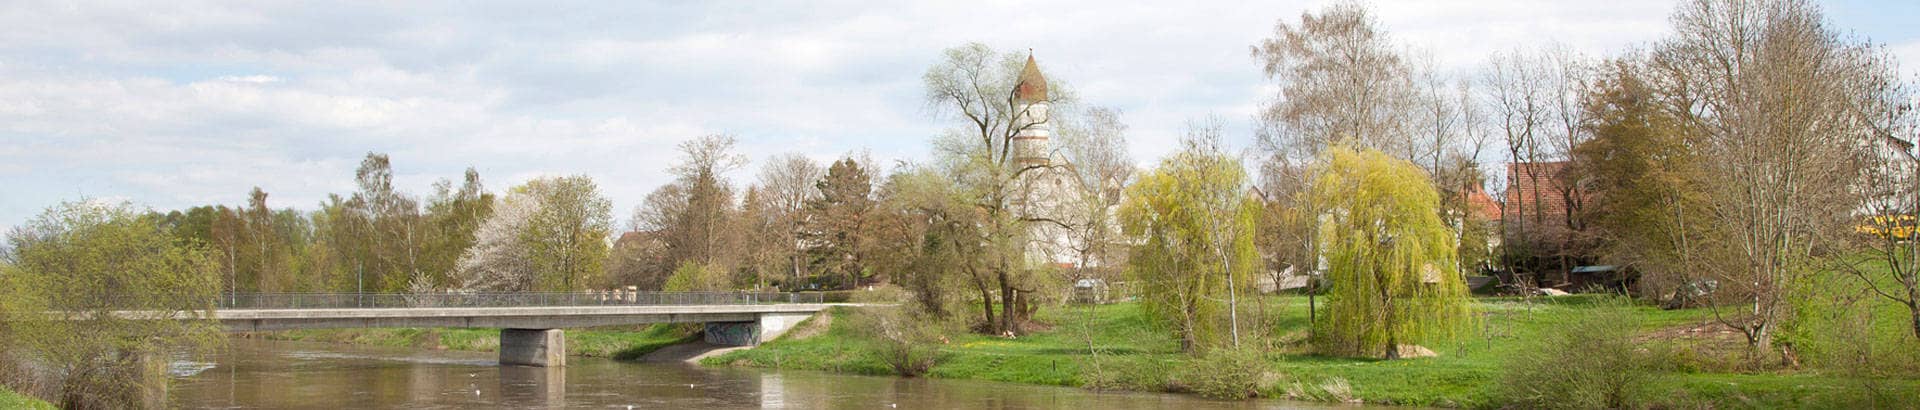 Donau mit Dorfkirche St. Briccius